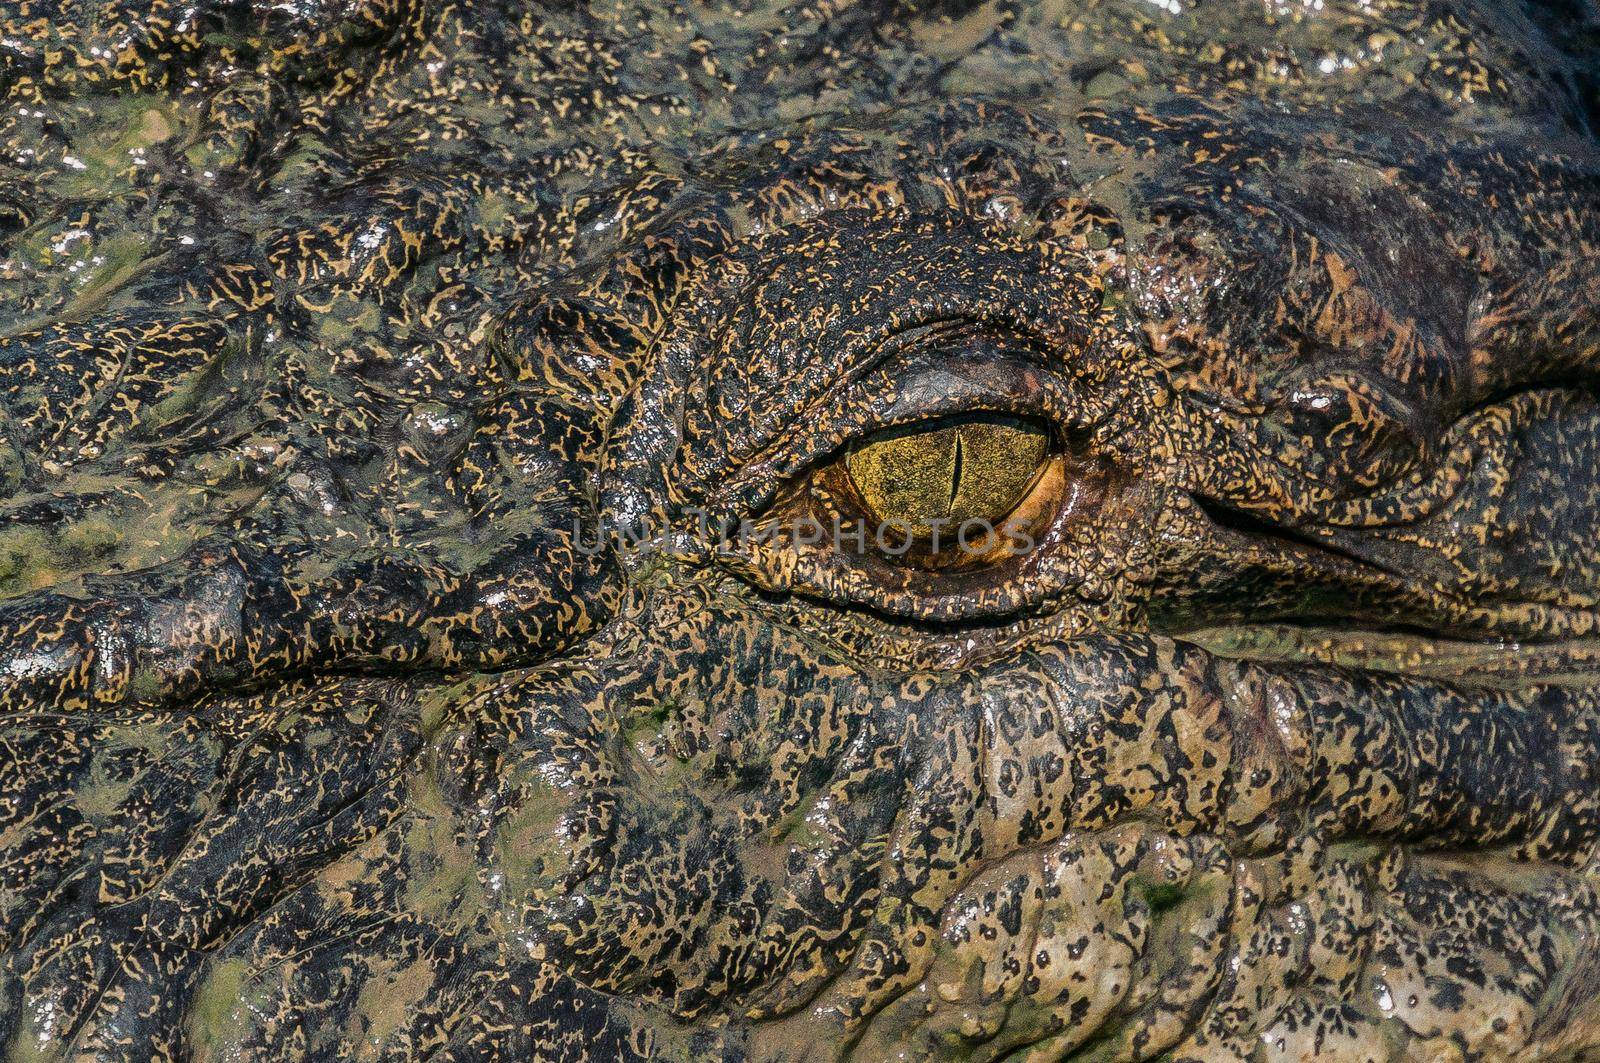 Eye of the crocodile in Kakadu National Park in Australia's